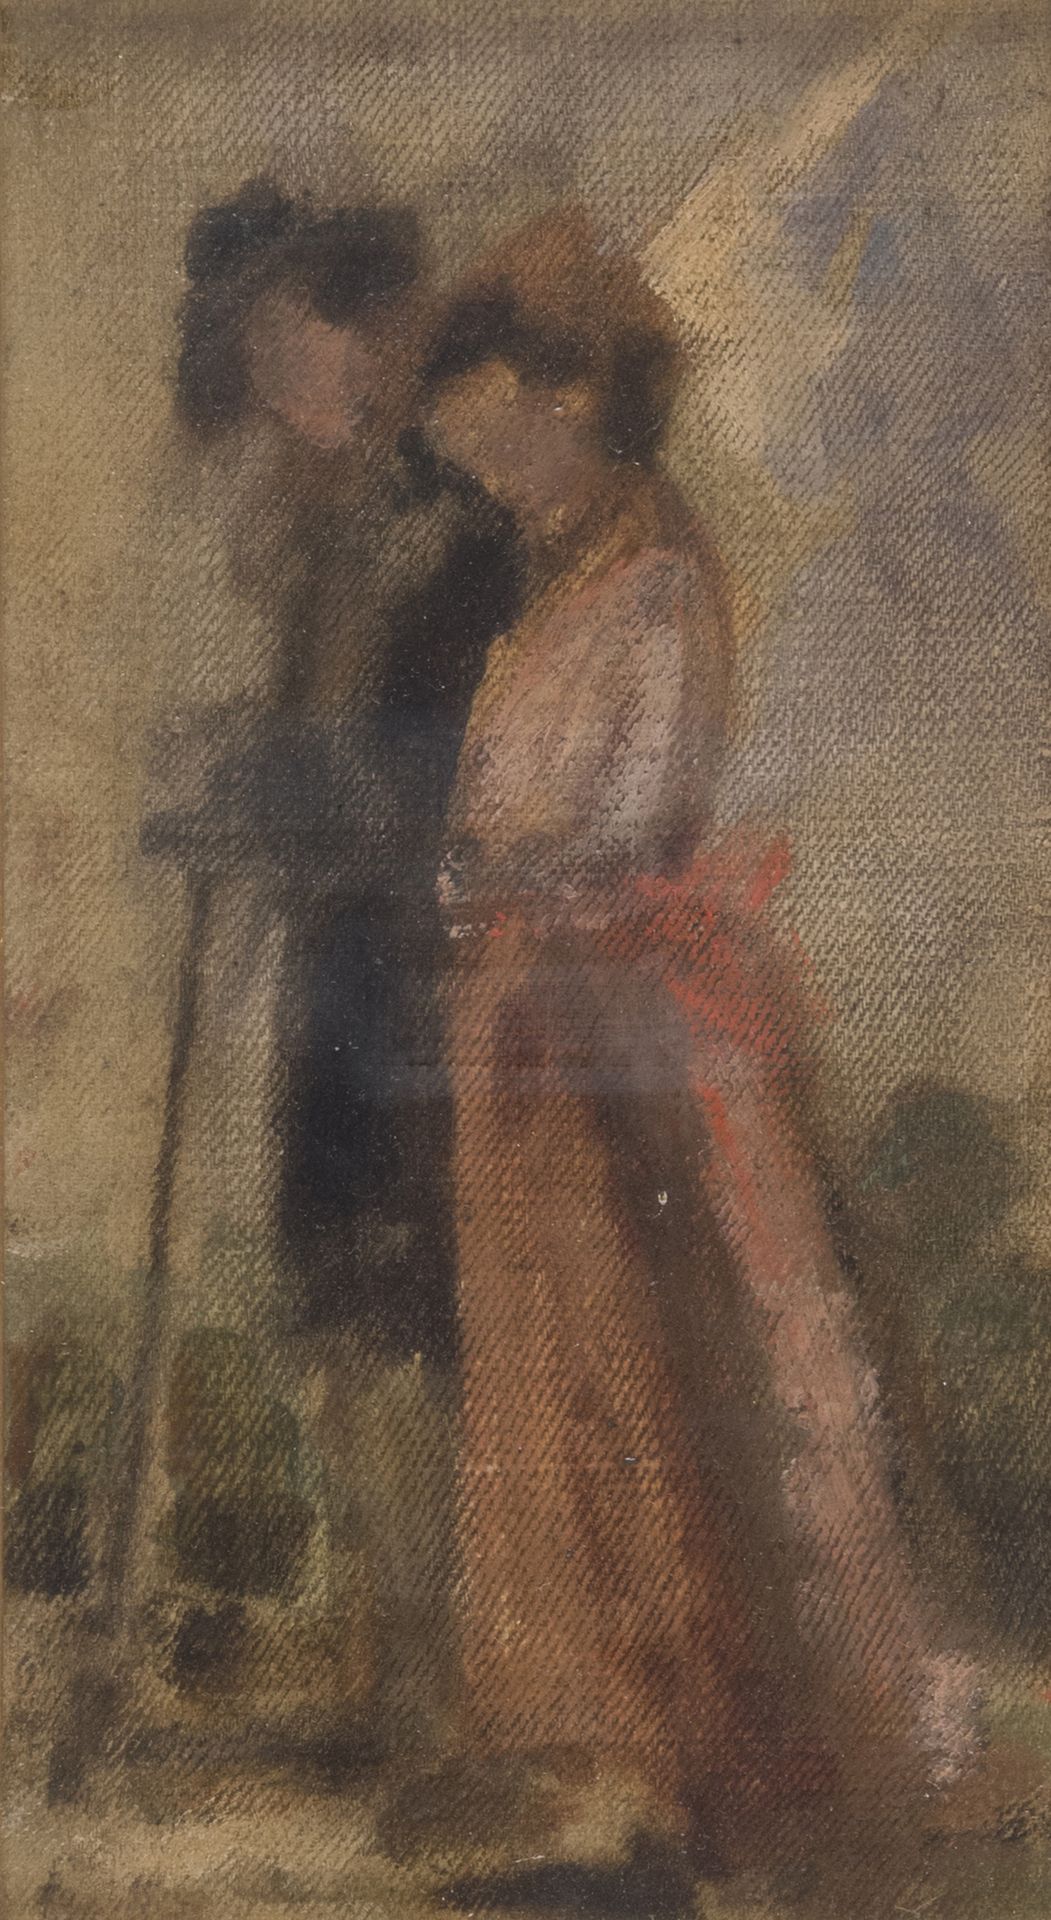 Null 20世纪画家



漫步的人物

布面油画，cm. 26 x 15

有框